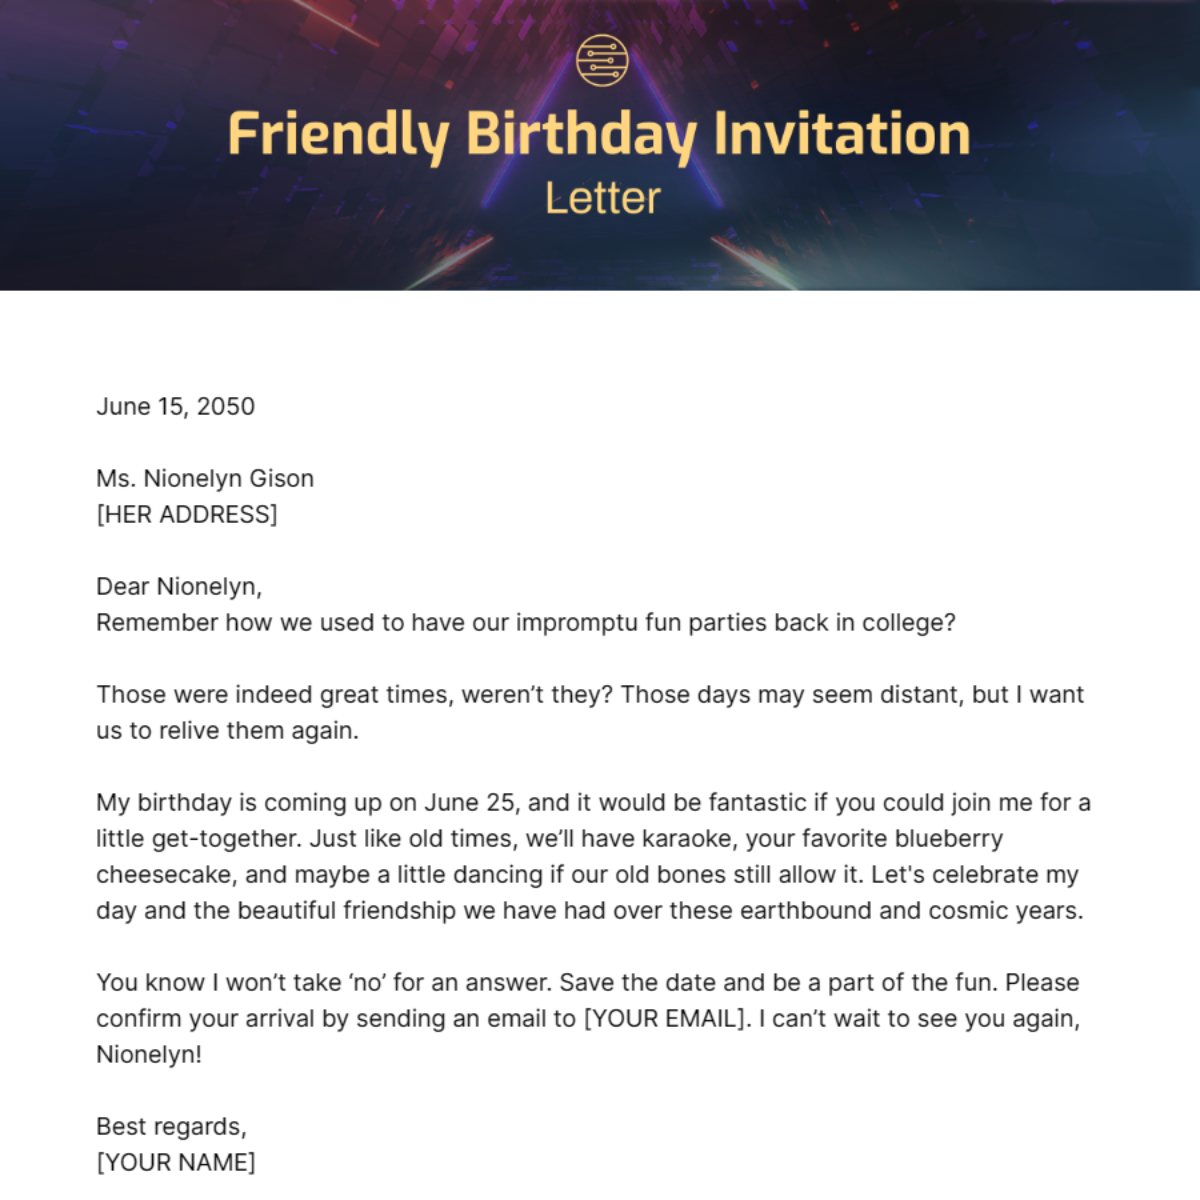 Friendly Birthday Invitation Letter Template